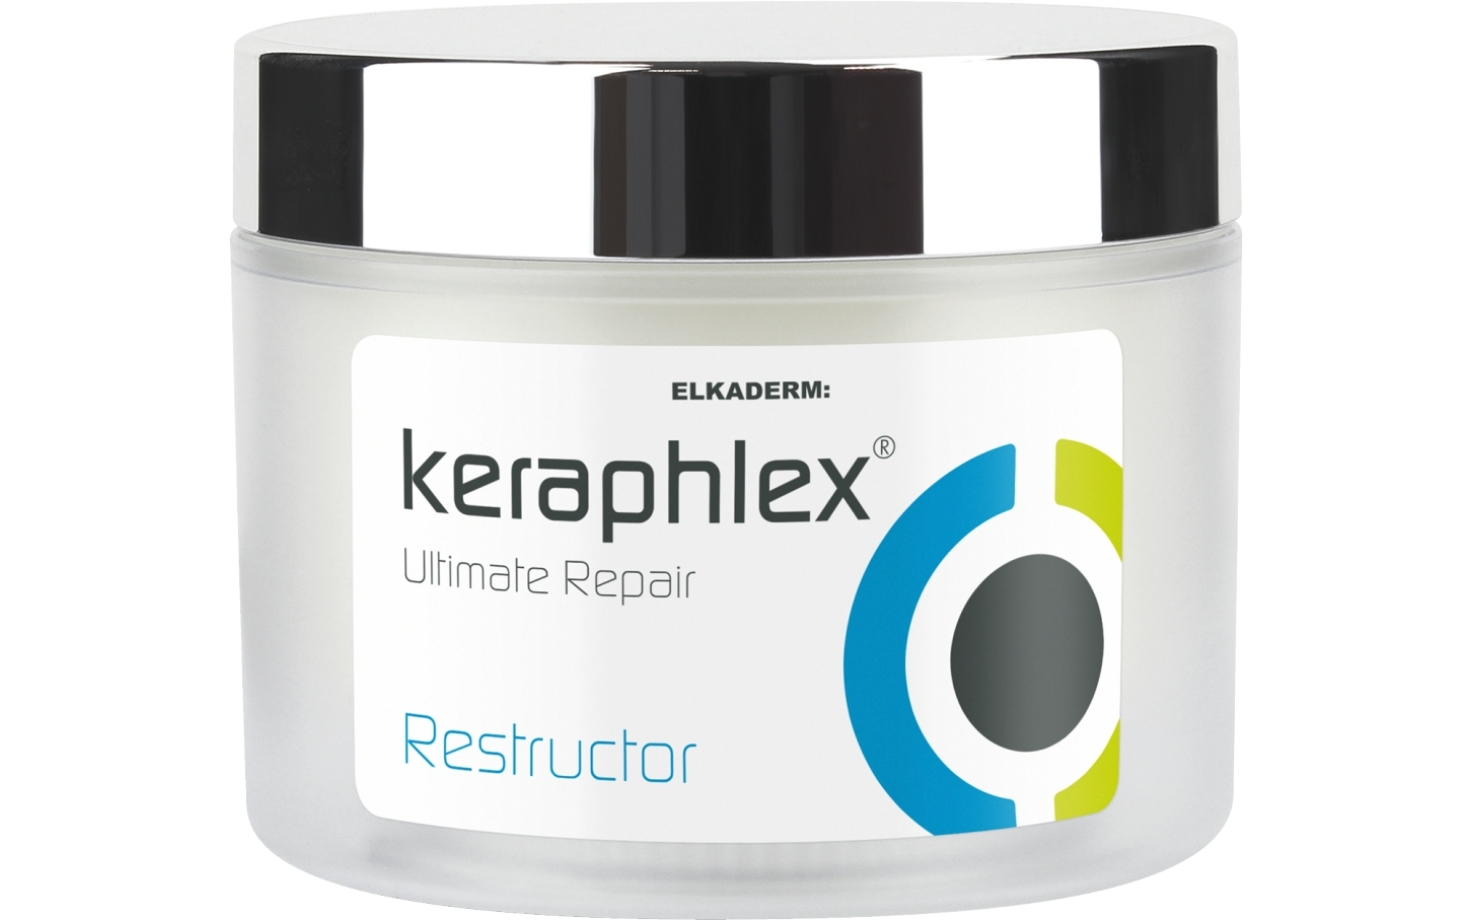 Keraphlex Ultimate Repair Restructor 200 ml